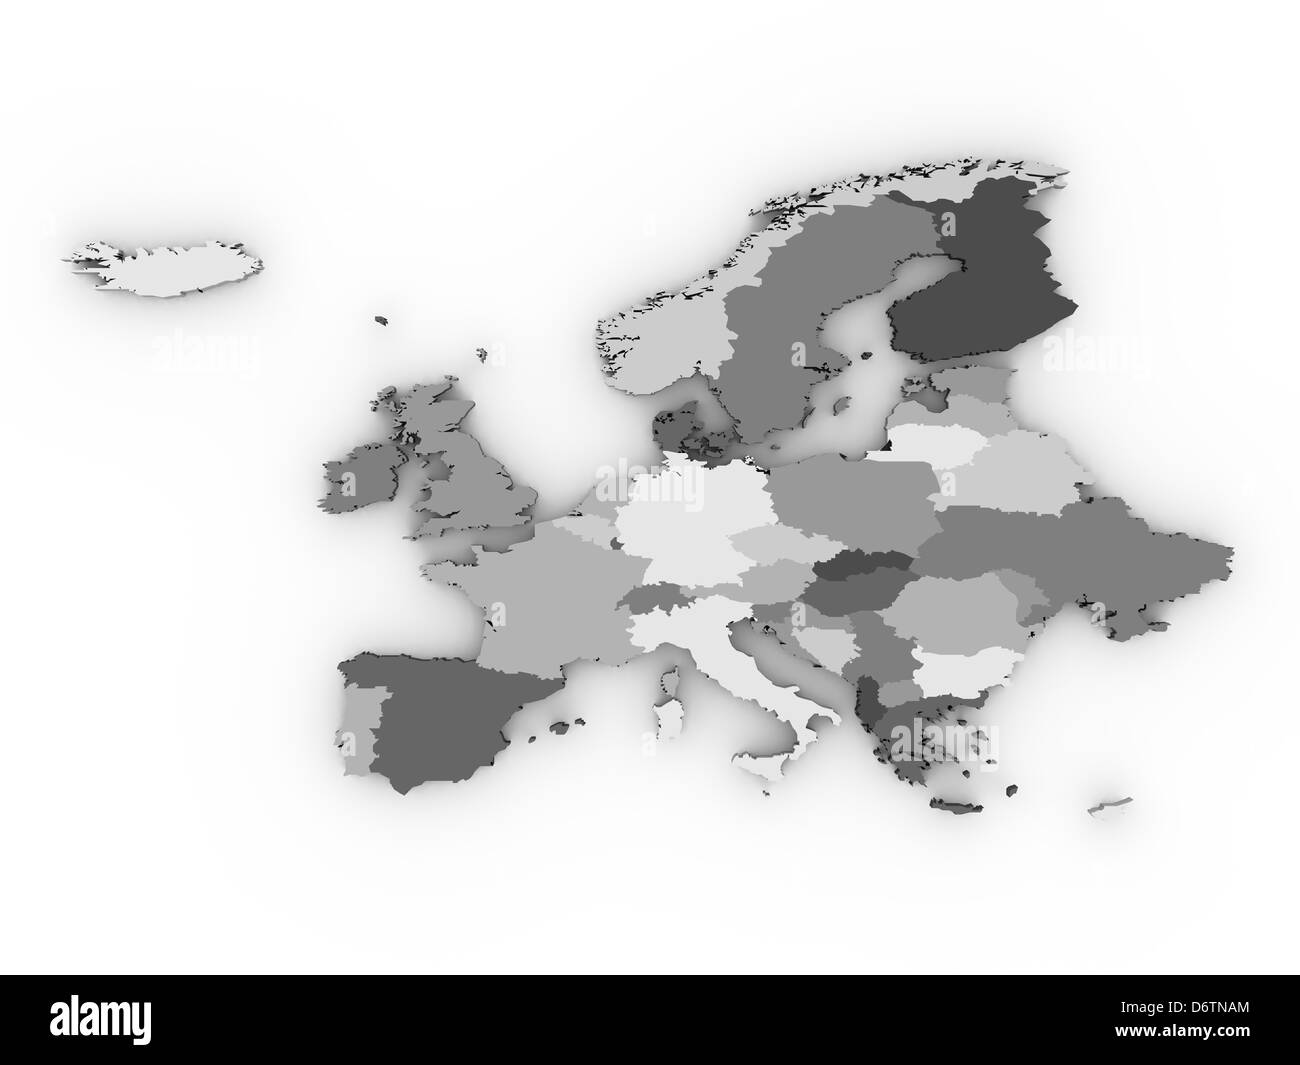 Political map of Europe isolated isolated on white background Stock Photo